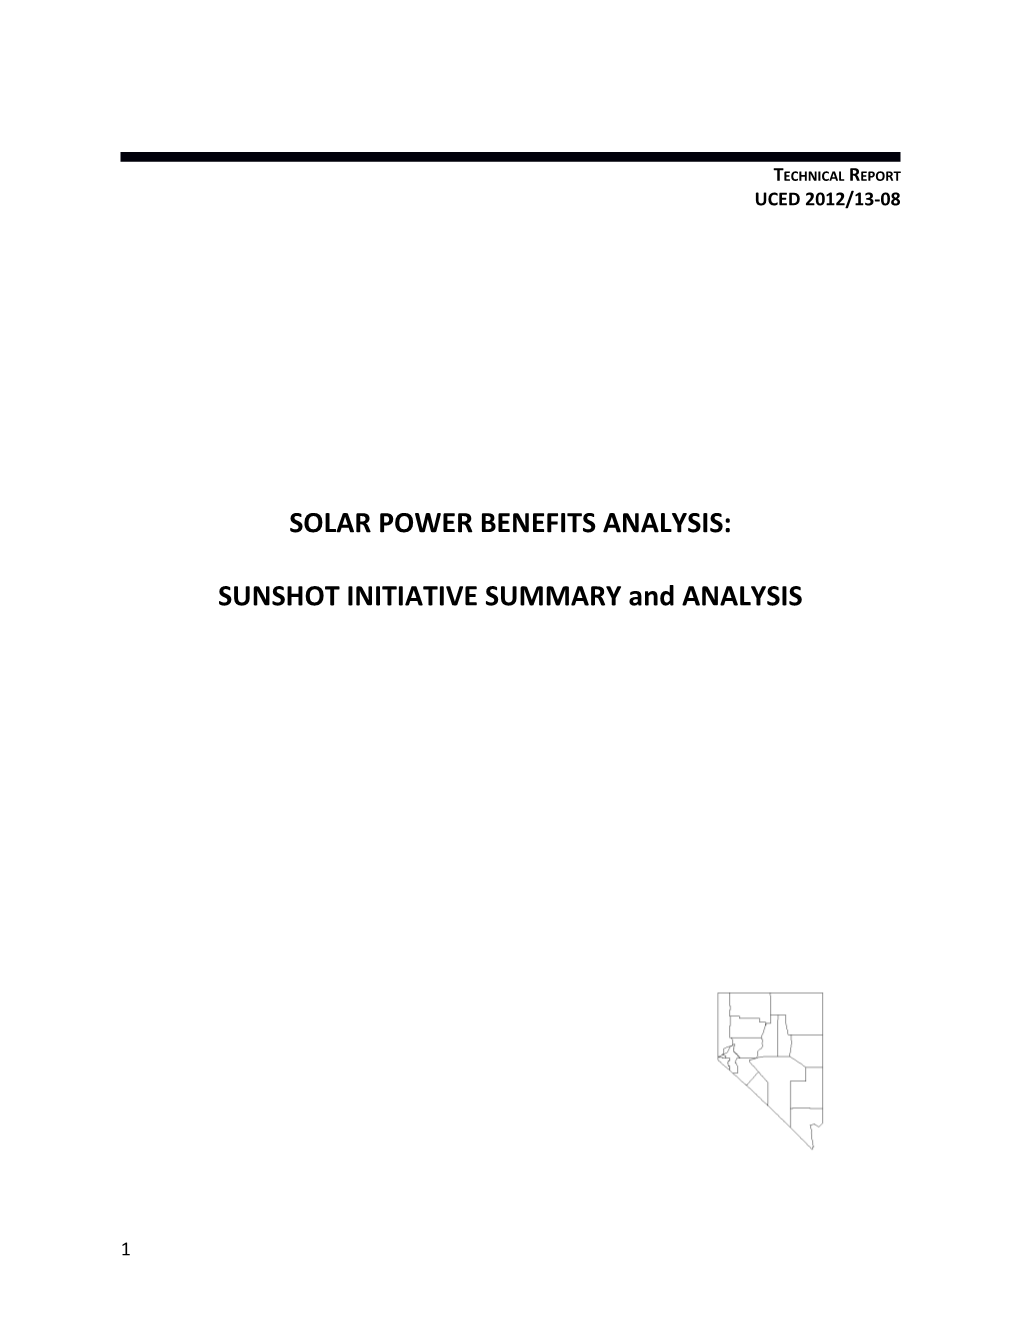 Solar Power Benefits Analysis